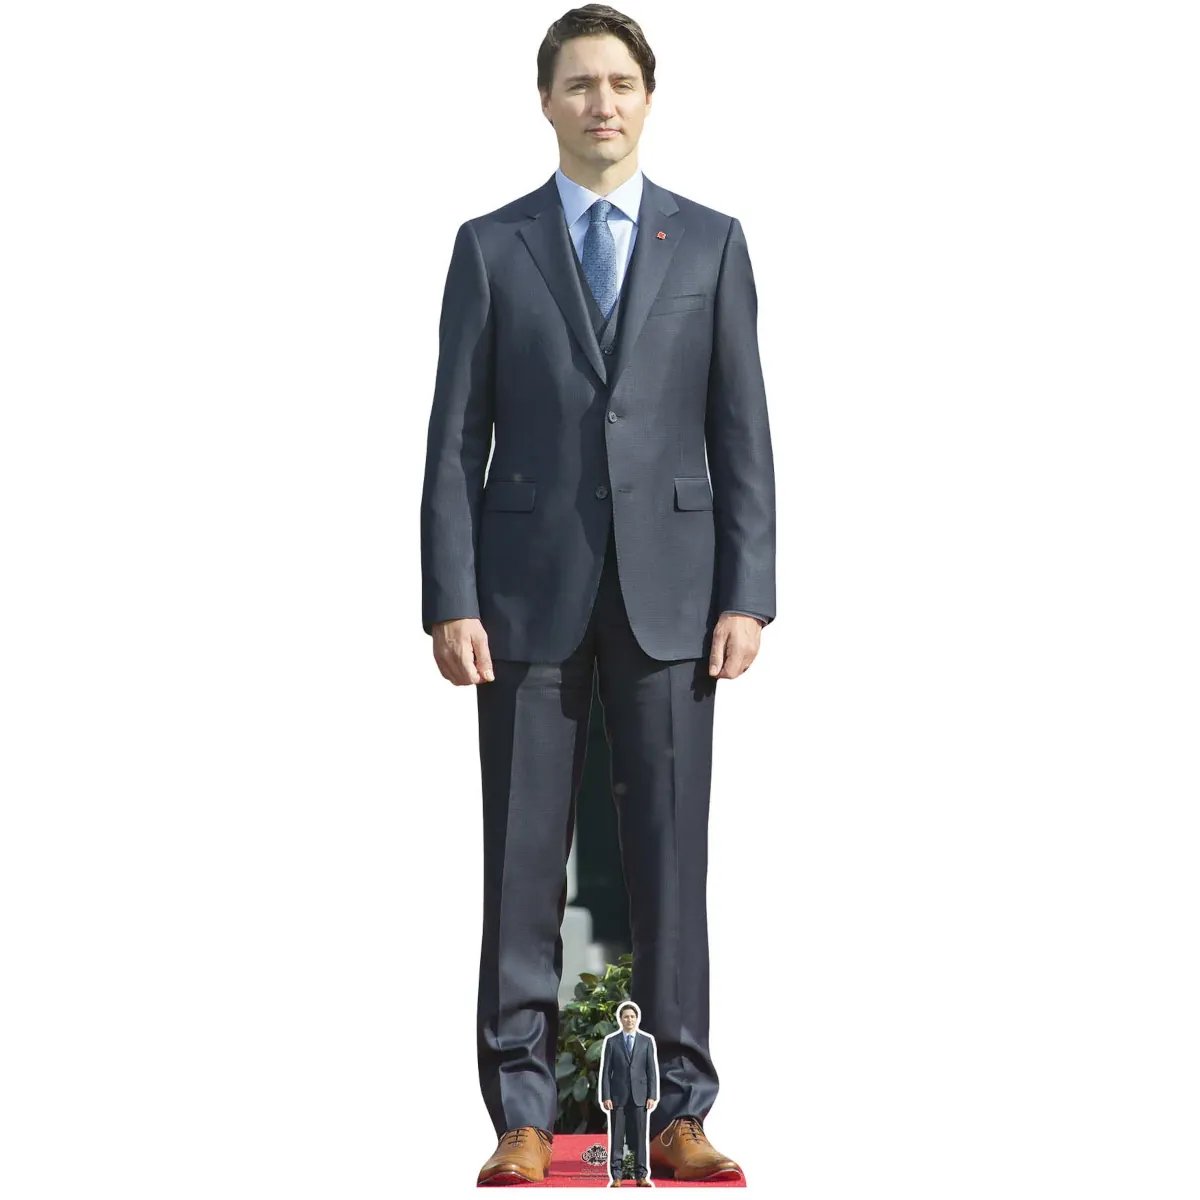 CS732 Justin Trudeau (Canadian Prime Minister) Lifesize + Mini Cardboard Cutout Standee Front